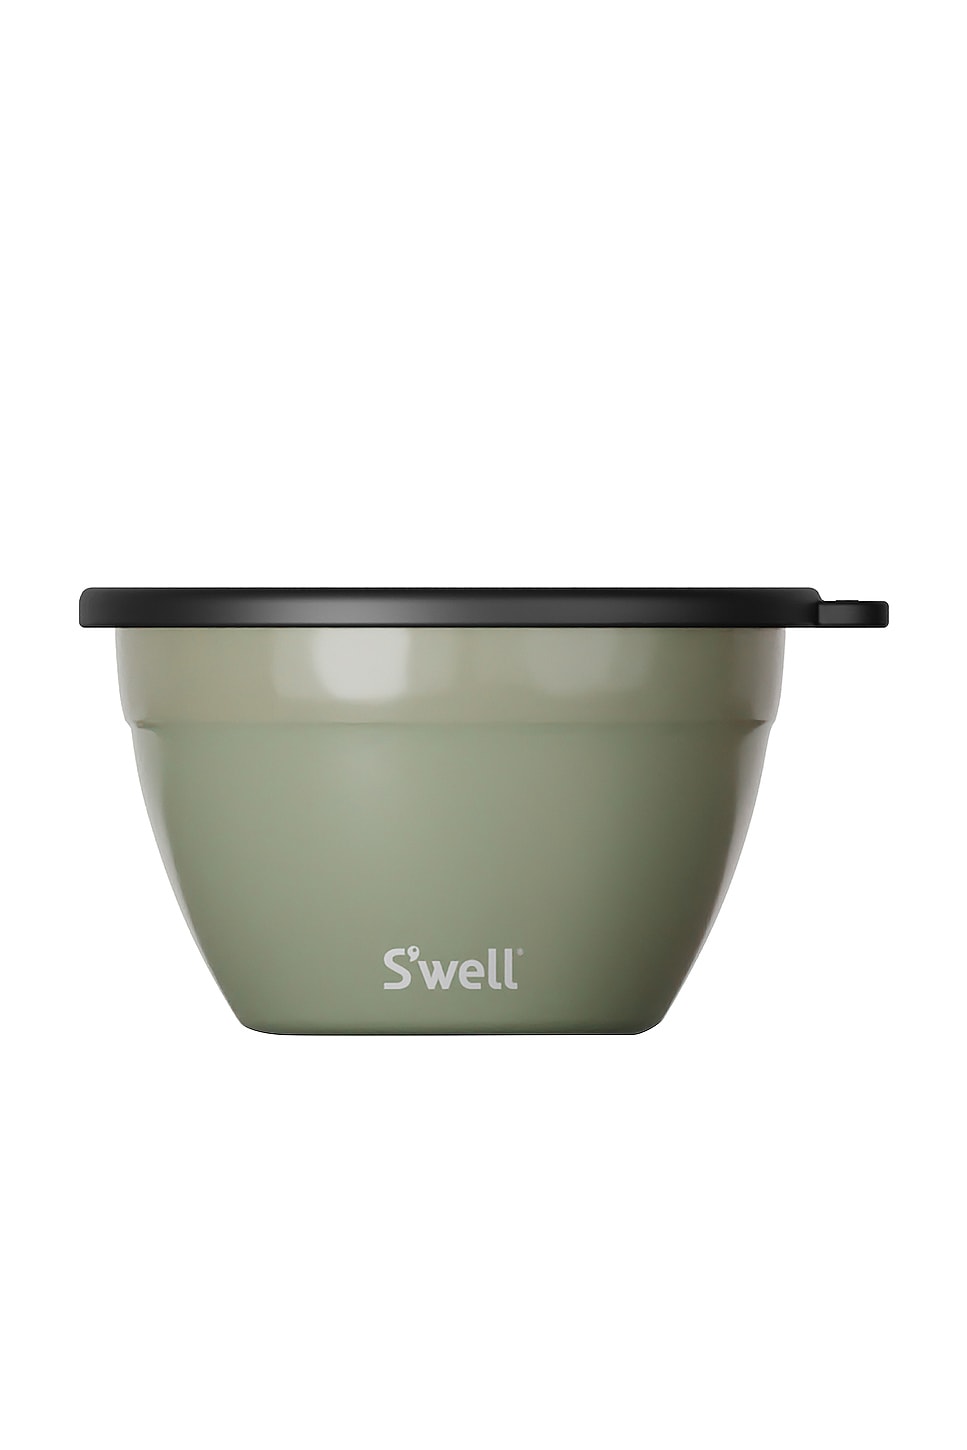 Swell: Meet the NEW Salad Bowl Kit!